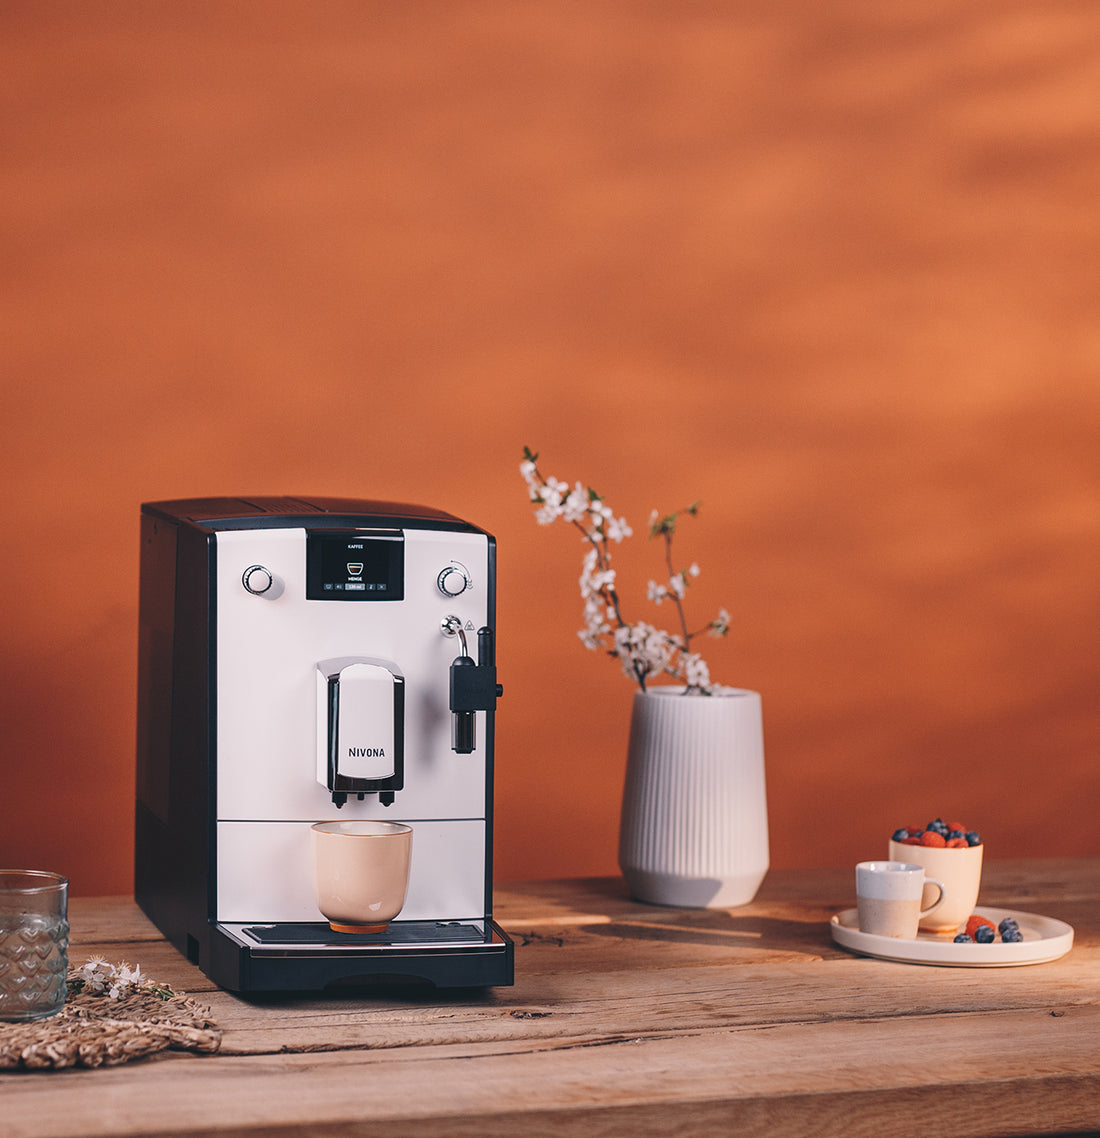 NICR 560 Cafe Romatica fully automatic espresso machine - Coffeeworkz